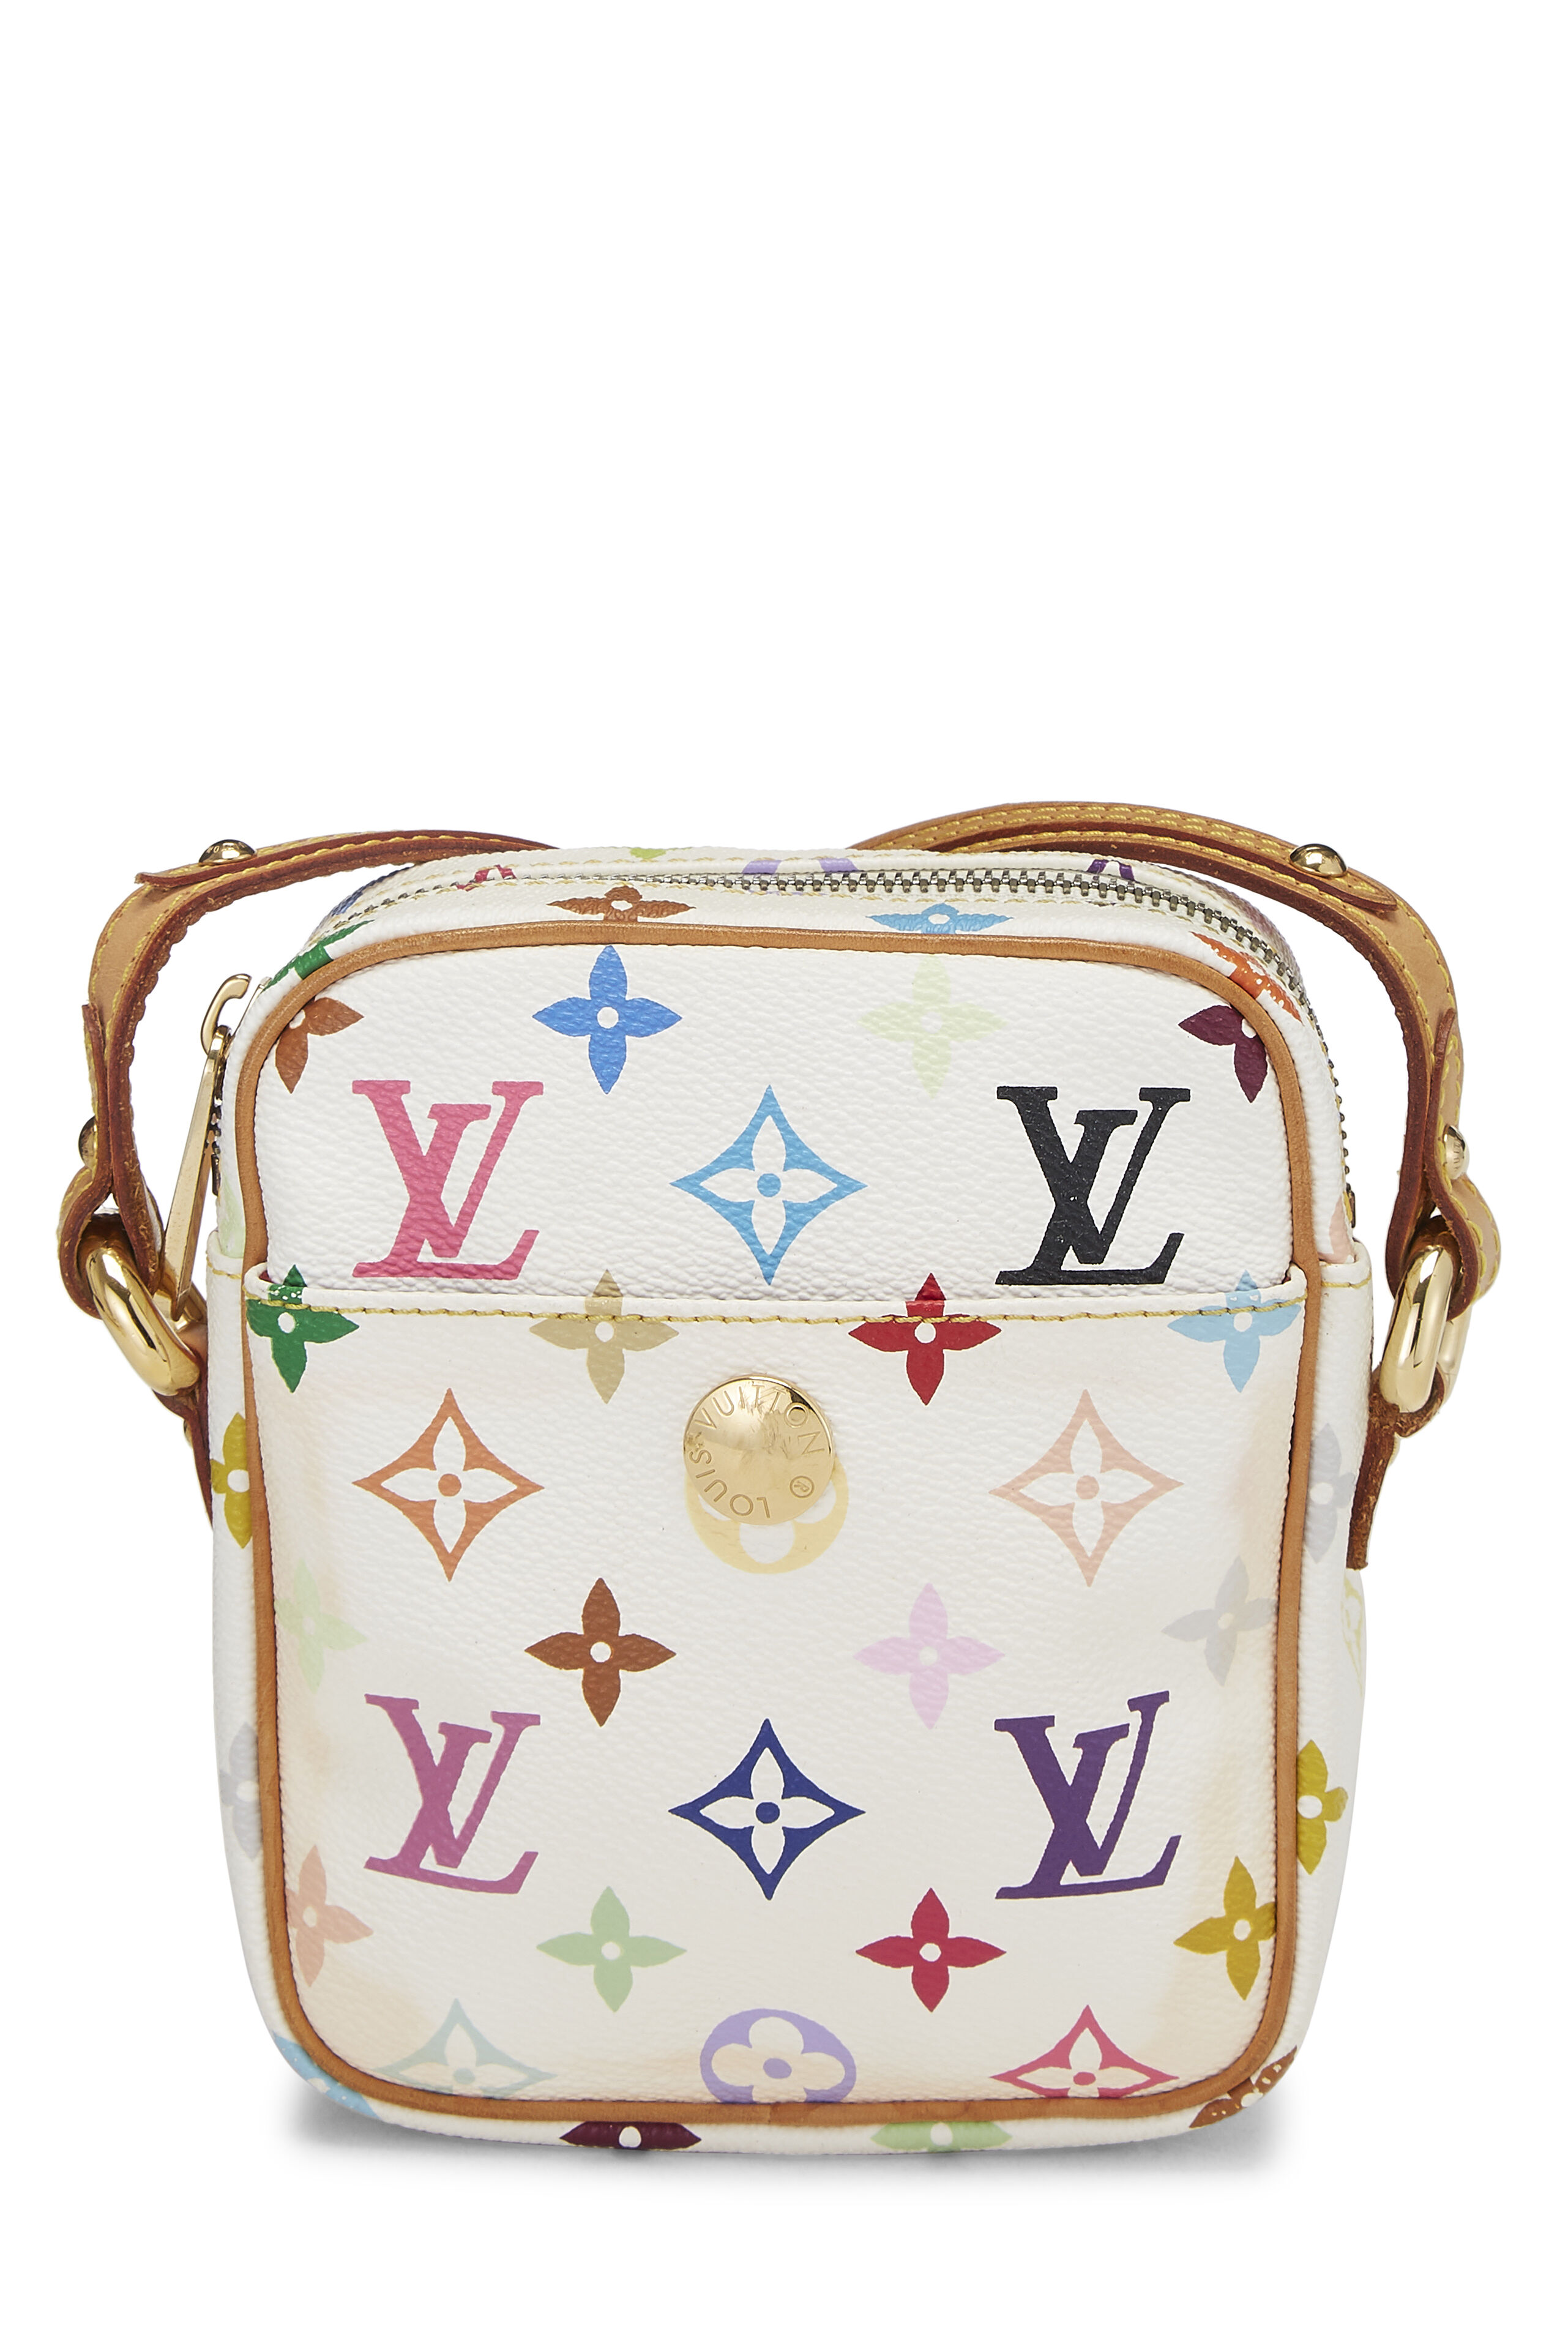 Pre-owned Louis Vuitton X Takashi Murakami 2005 Rift Shoulder Bag In White